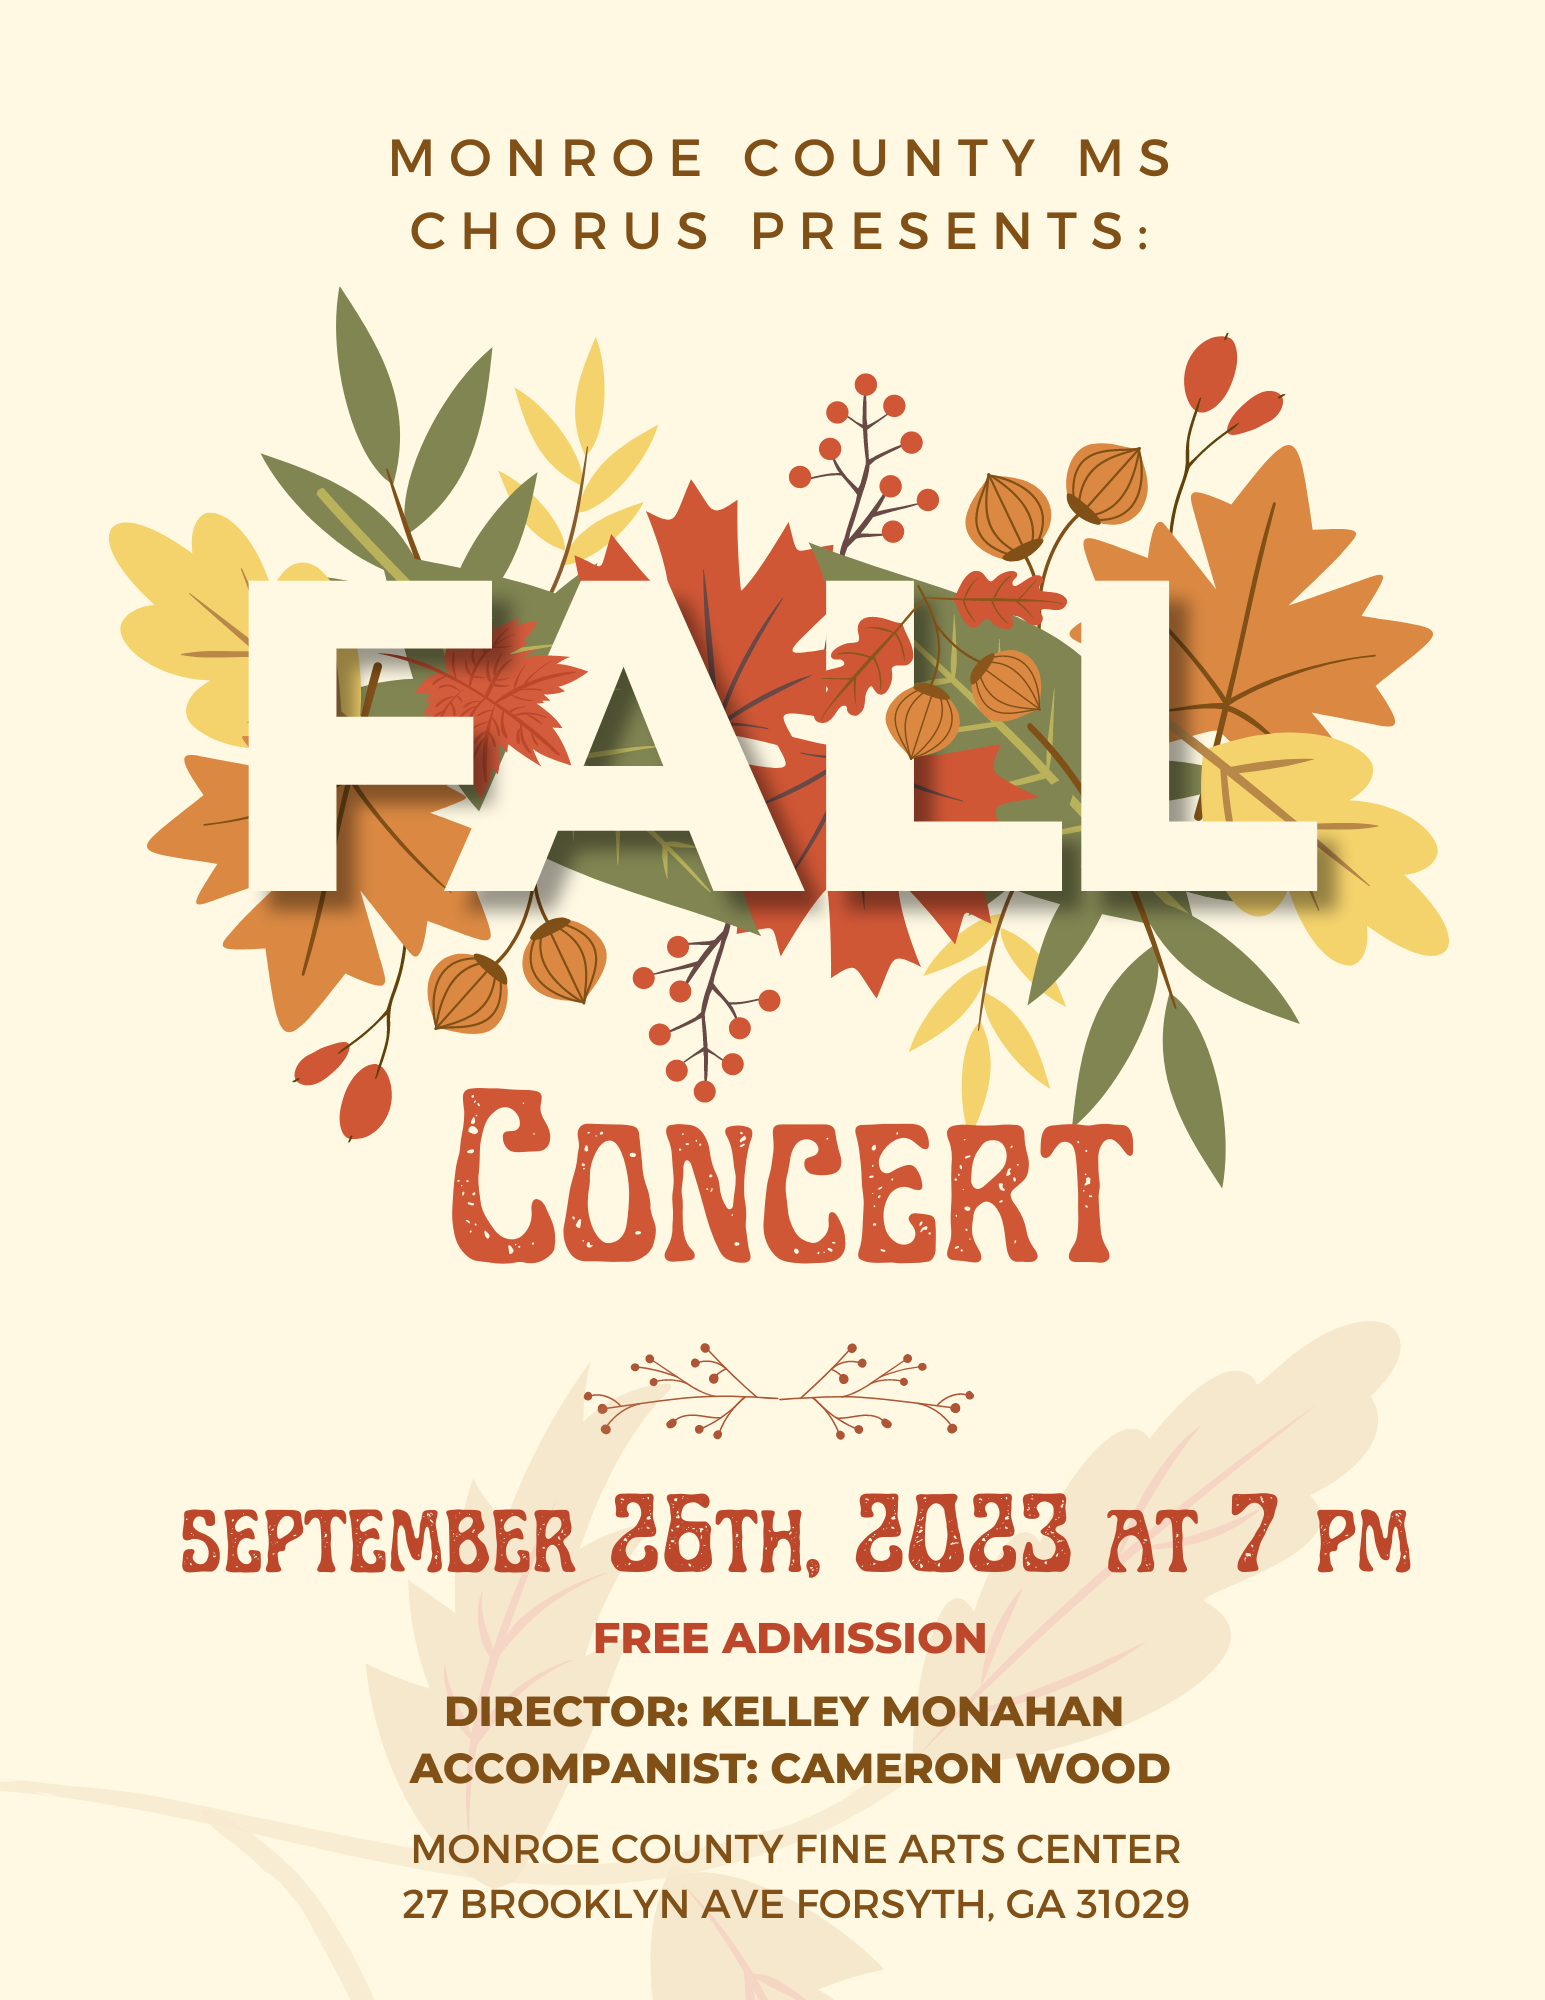 MCMS Chorus Fall Concert